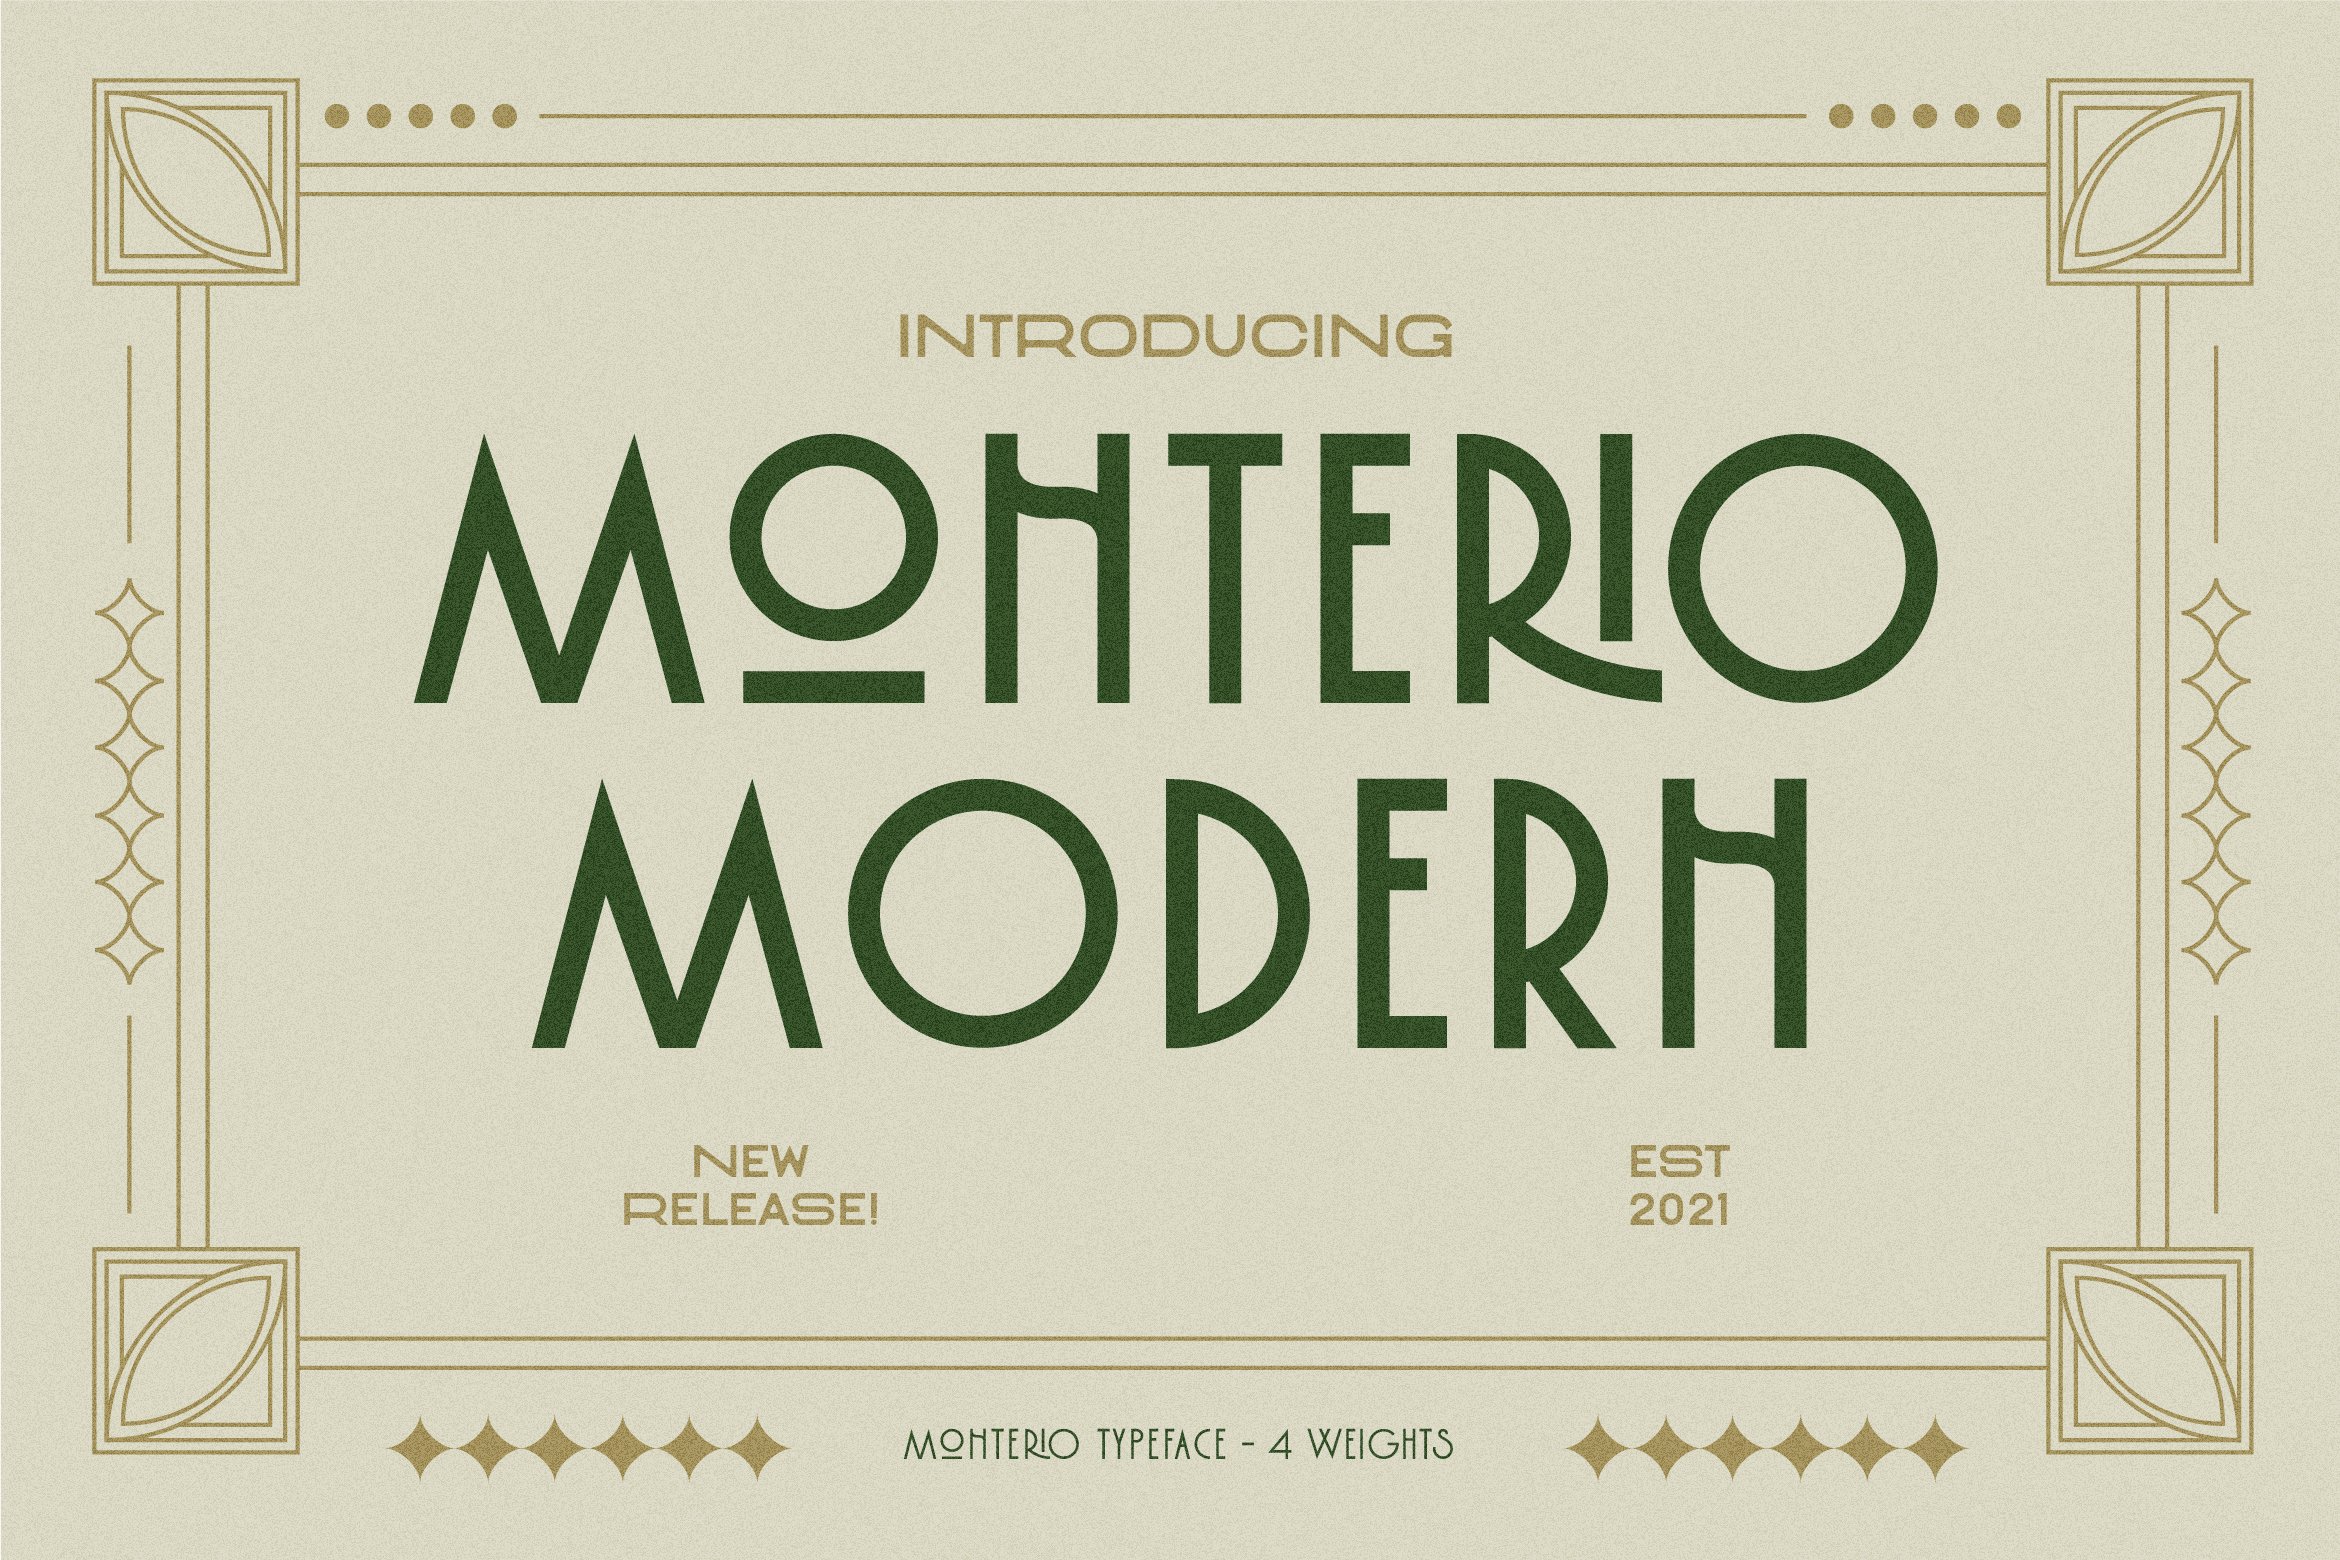 Monterio - Modern Art Deco Typeface cover image.